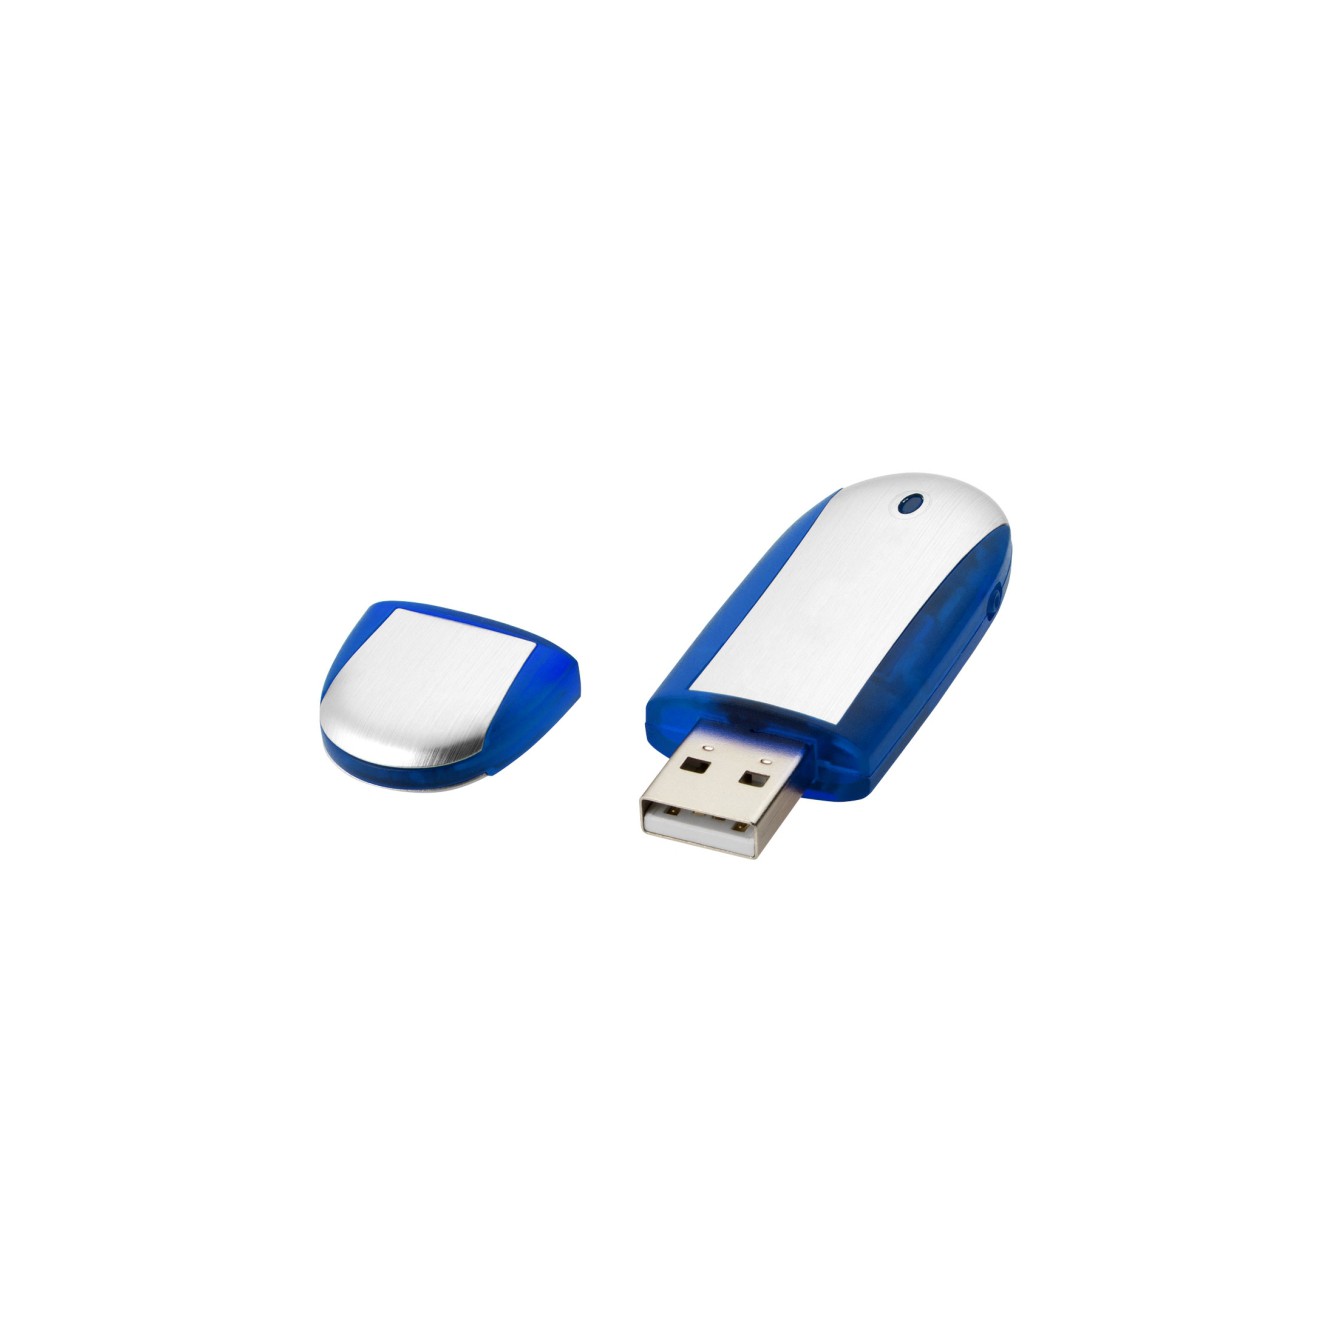 USB stick Oval